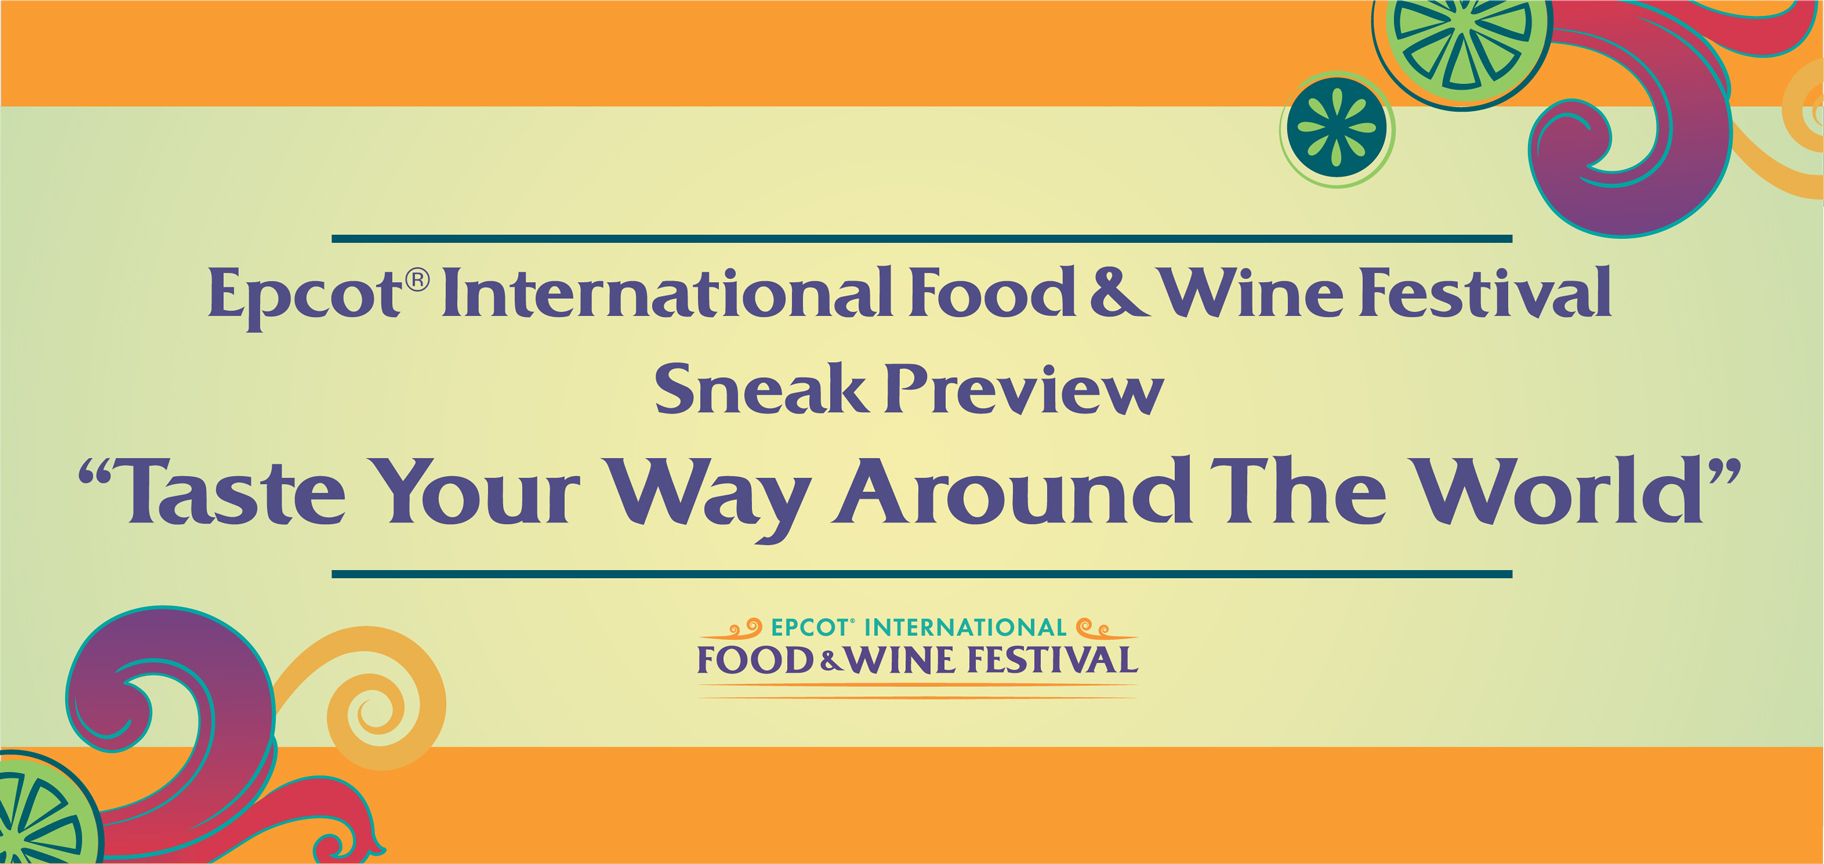 Special Tables in Wonderland Event in July – Food & Wine Festival Sneak Peek